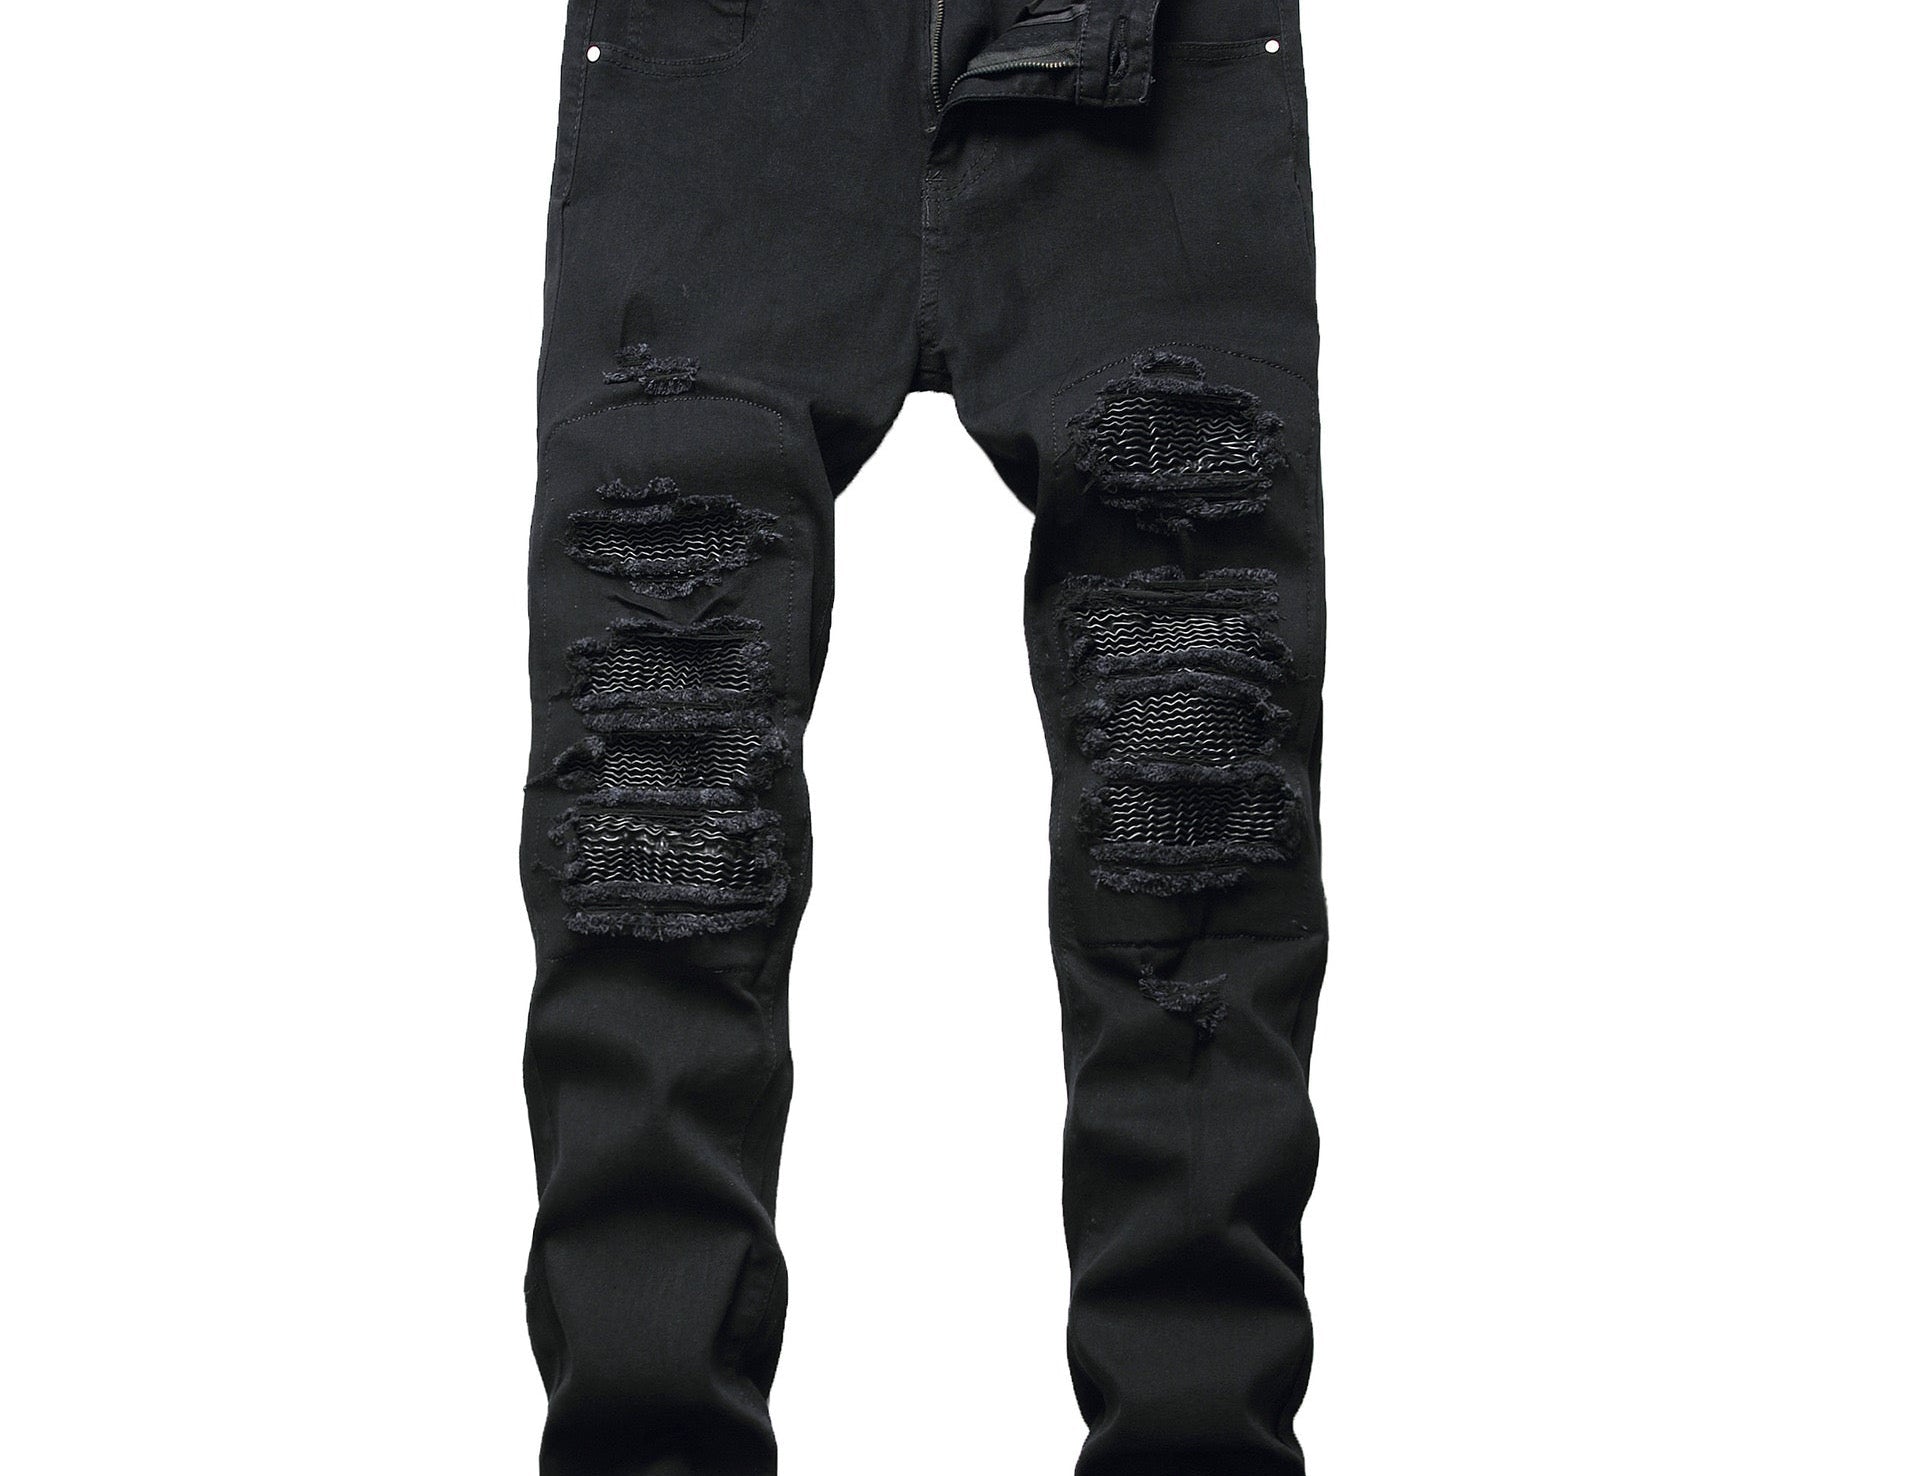 (Copy) BLUI - Denim Jeans for Men - Sarman Fashion - Wholesale Clothing Fashion Brand for Men from Canada